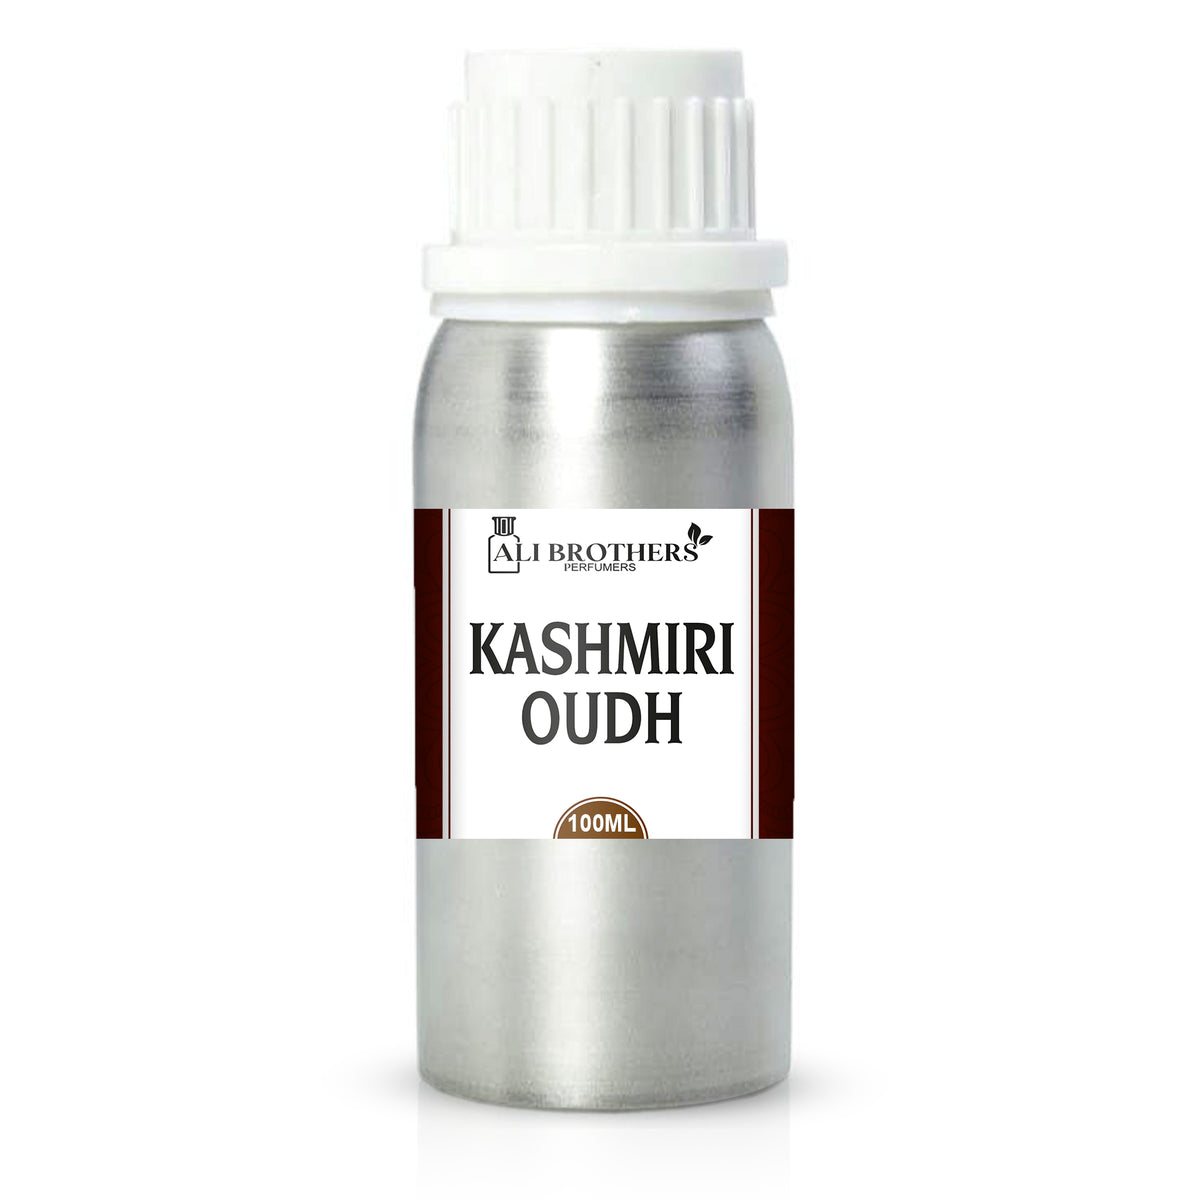 Kashmiri Oud